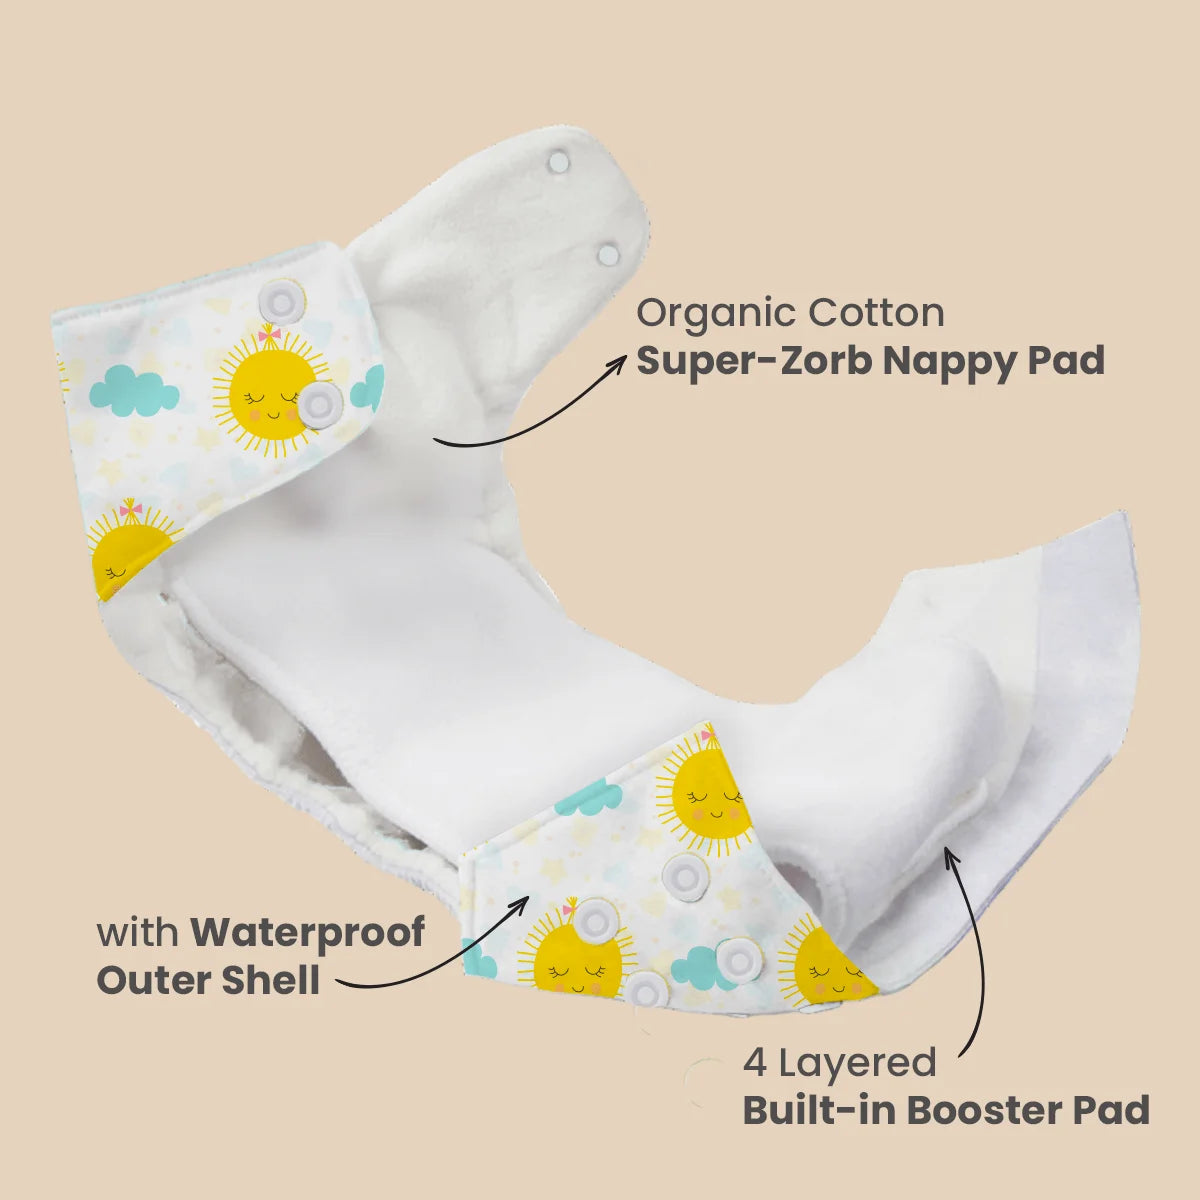 Plain Yellow Reusable Diaper